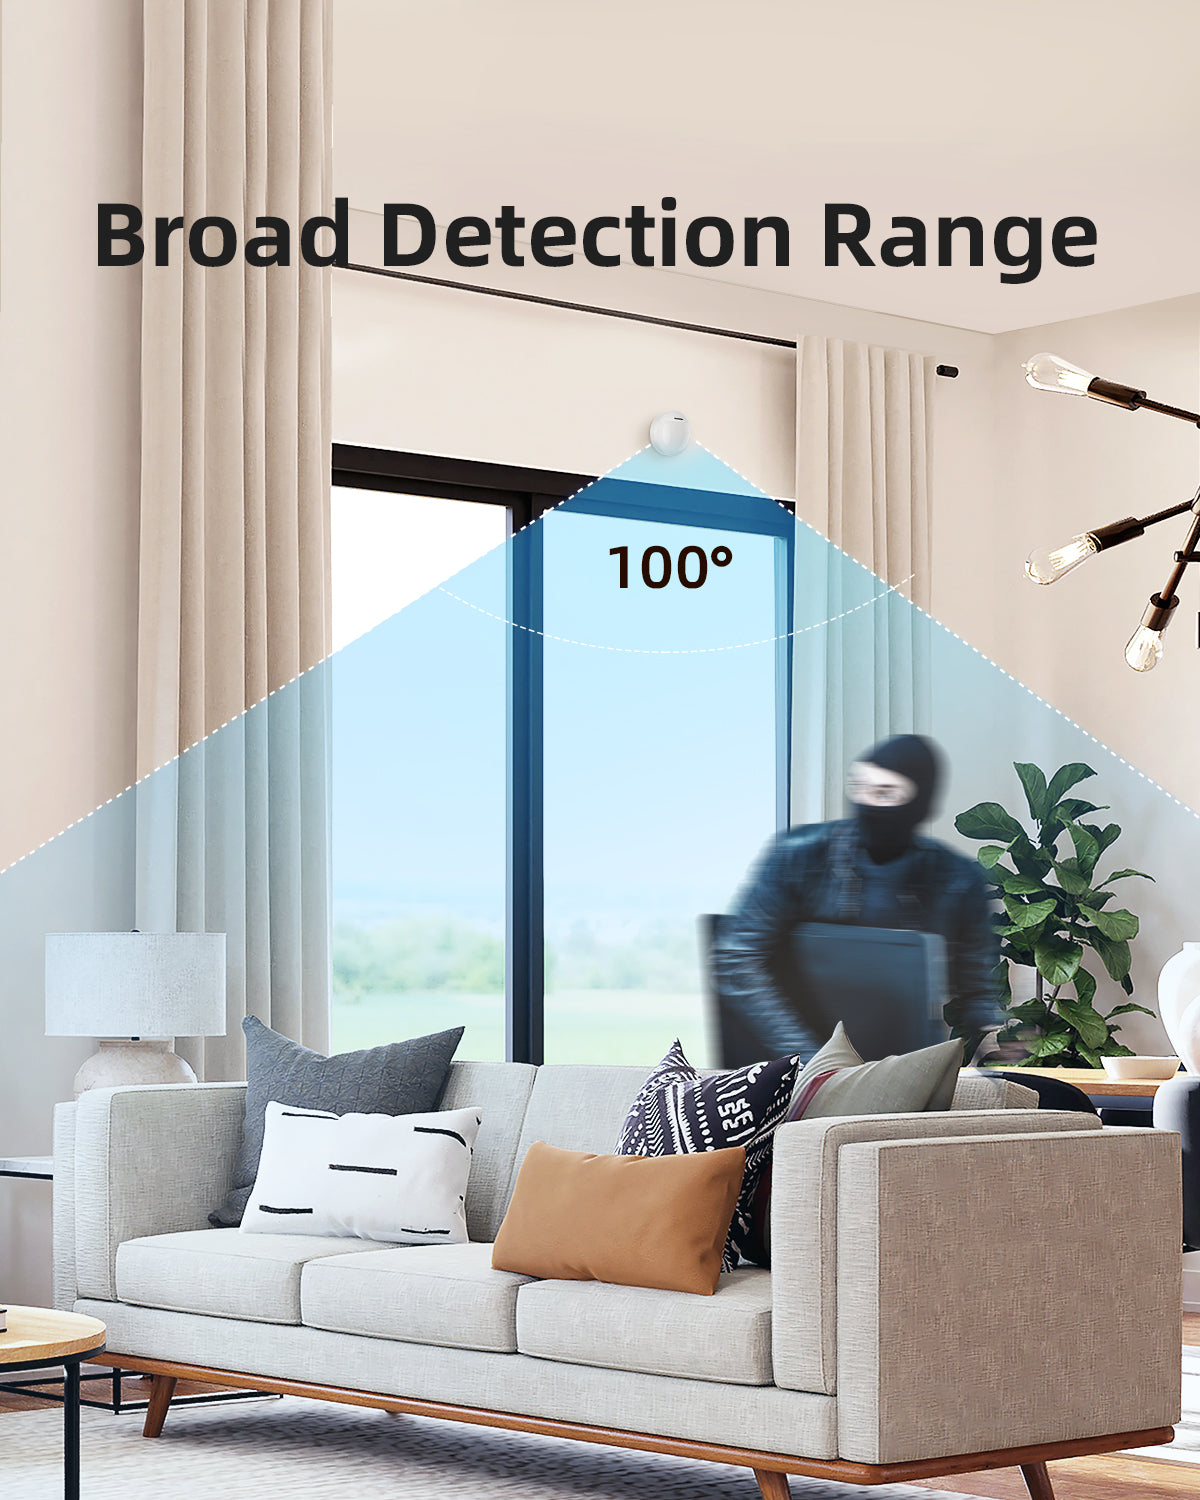 Noorio wireless motion sensor with broad detection range